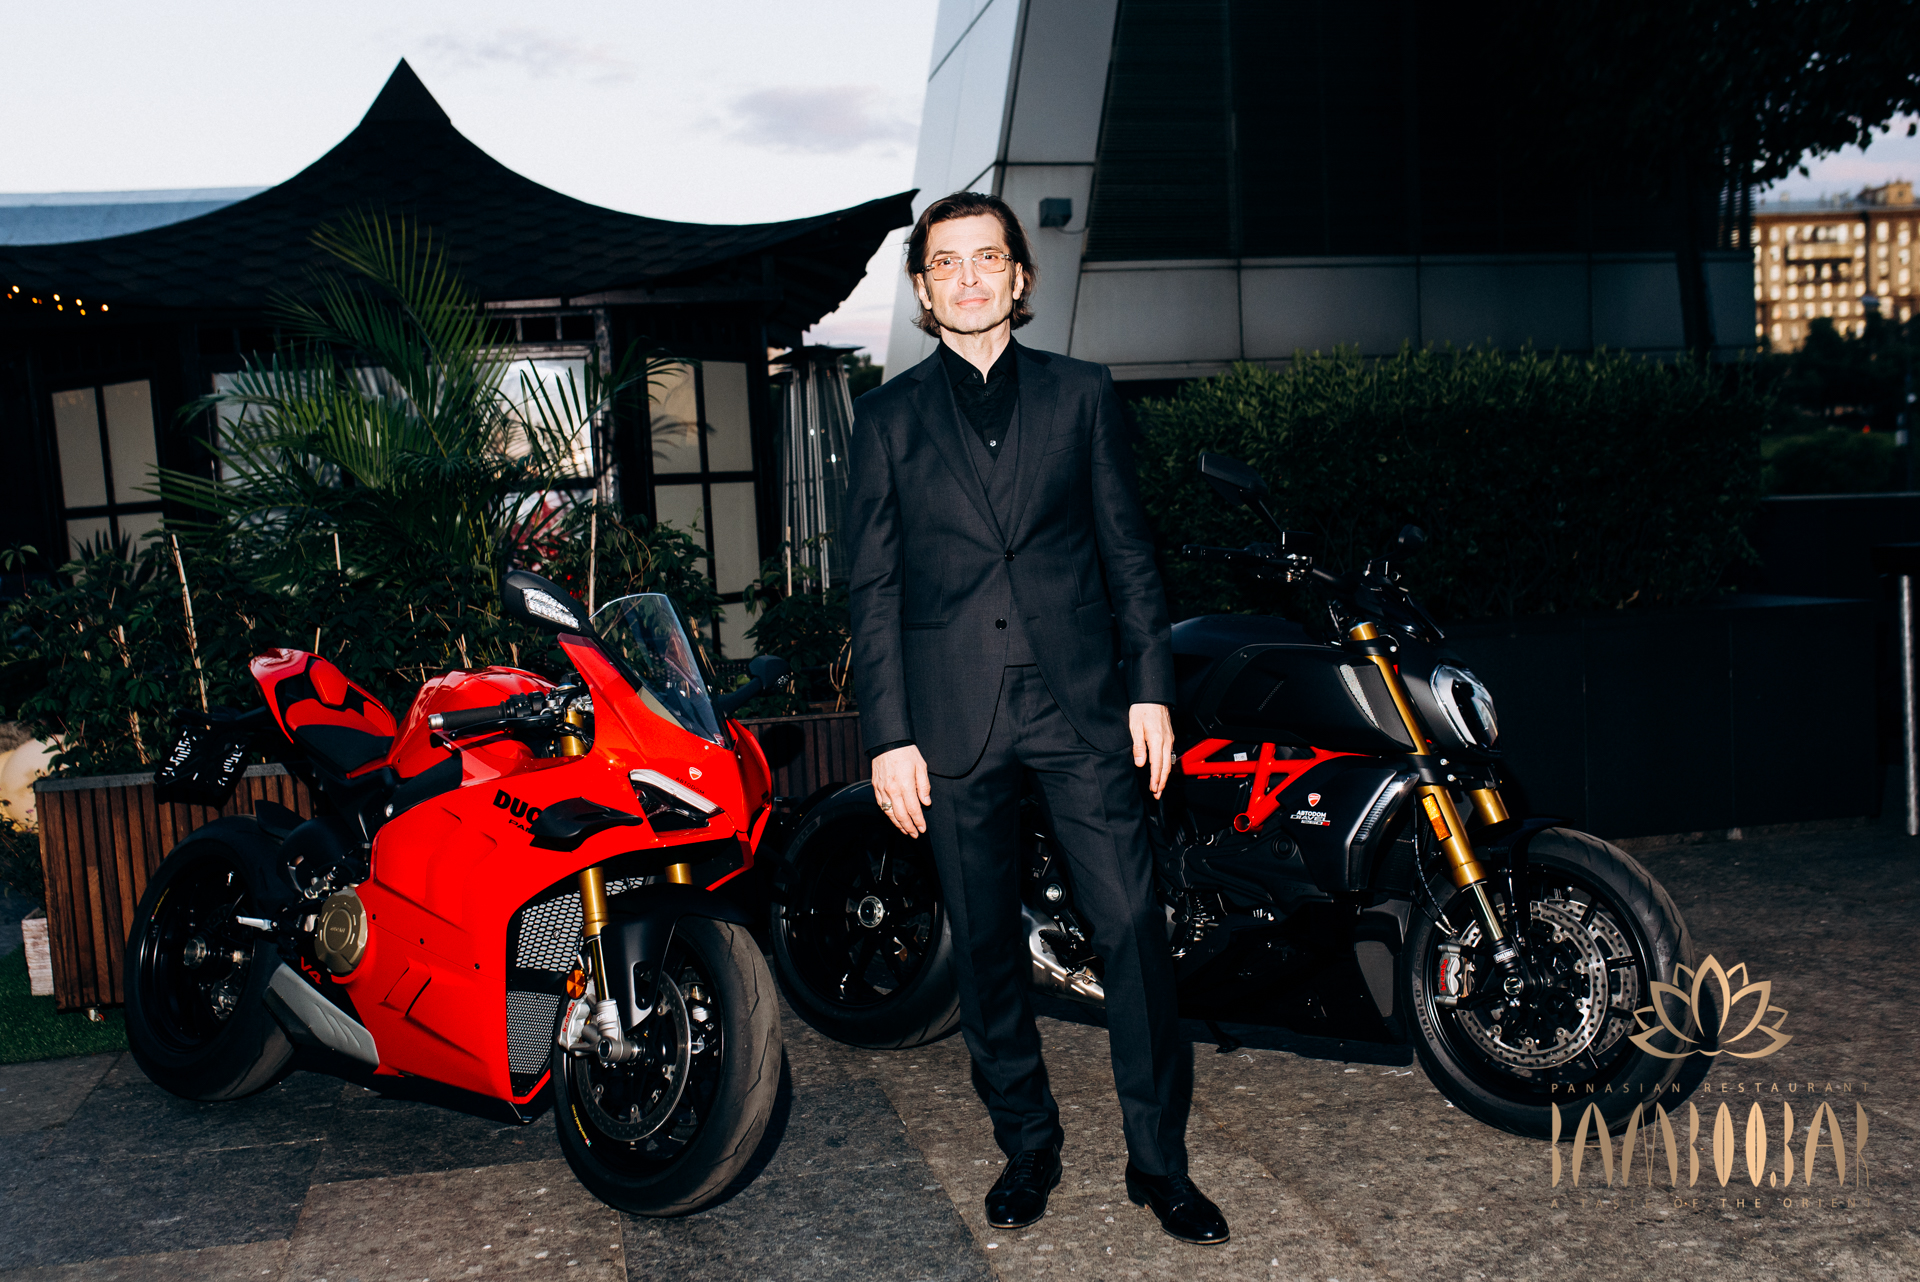 АВТОДОМ Ducati представил новые мотоциклы на дне рождения ресторана Bamboo.Bar - фото 1